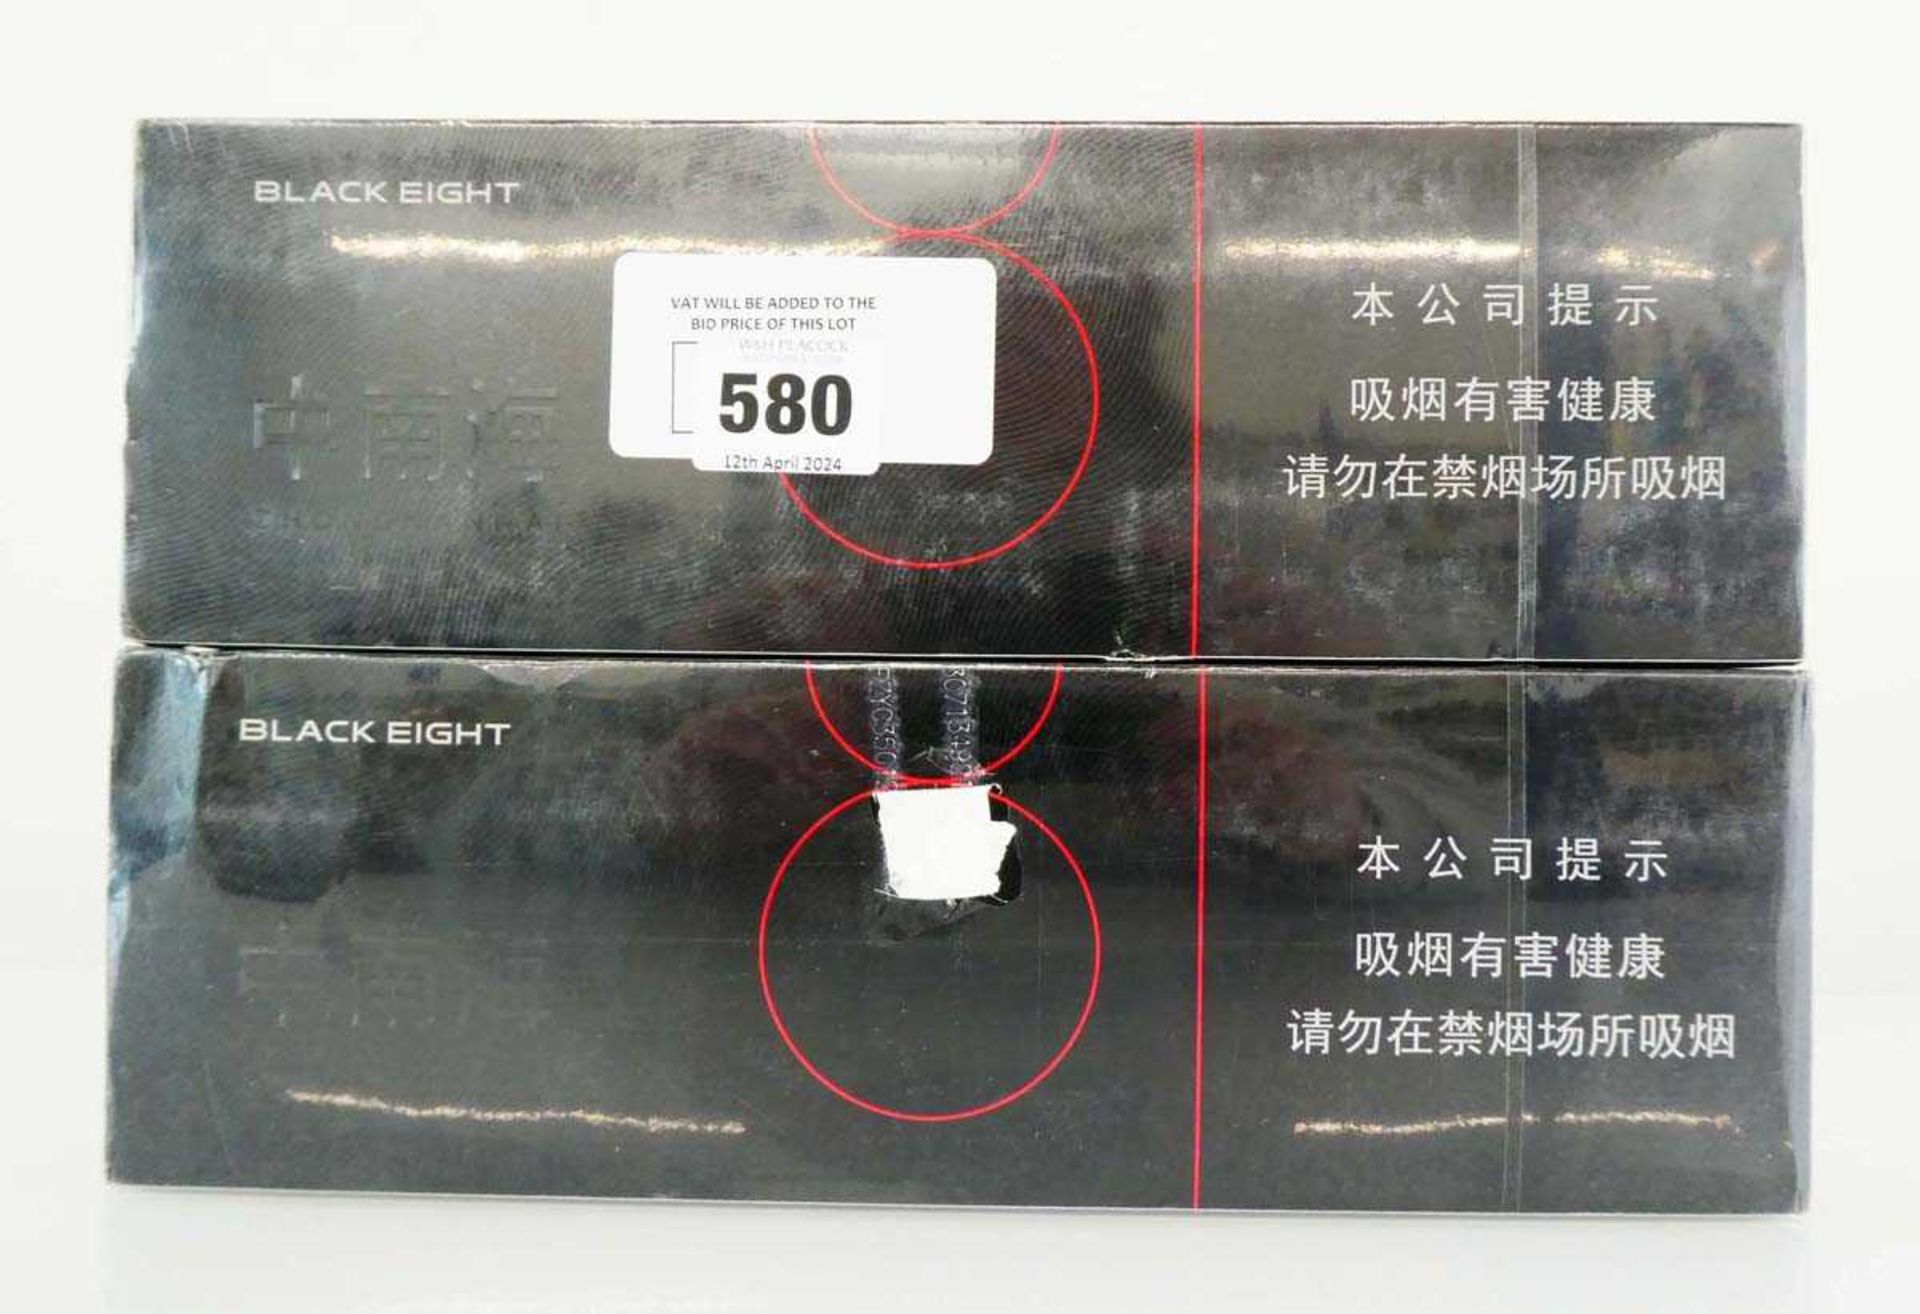 +VAT 2 cartons of 10 packs of 20 Zhongnanhai Black Eight Cigarettes (Note VAT added to bid price)